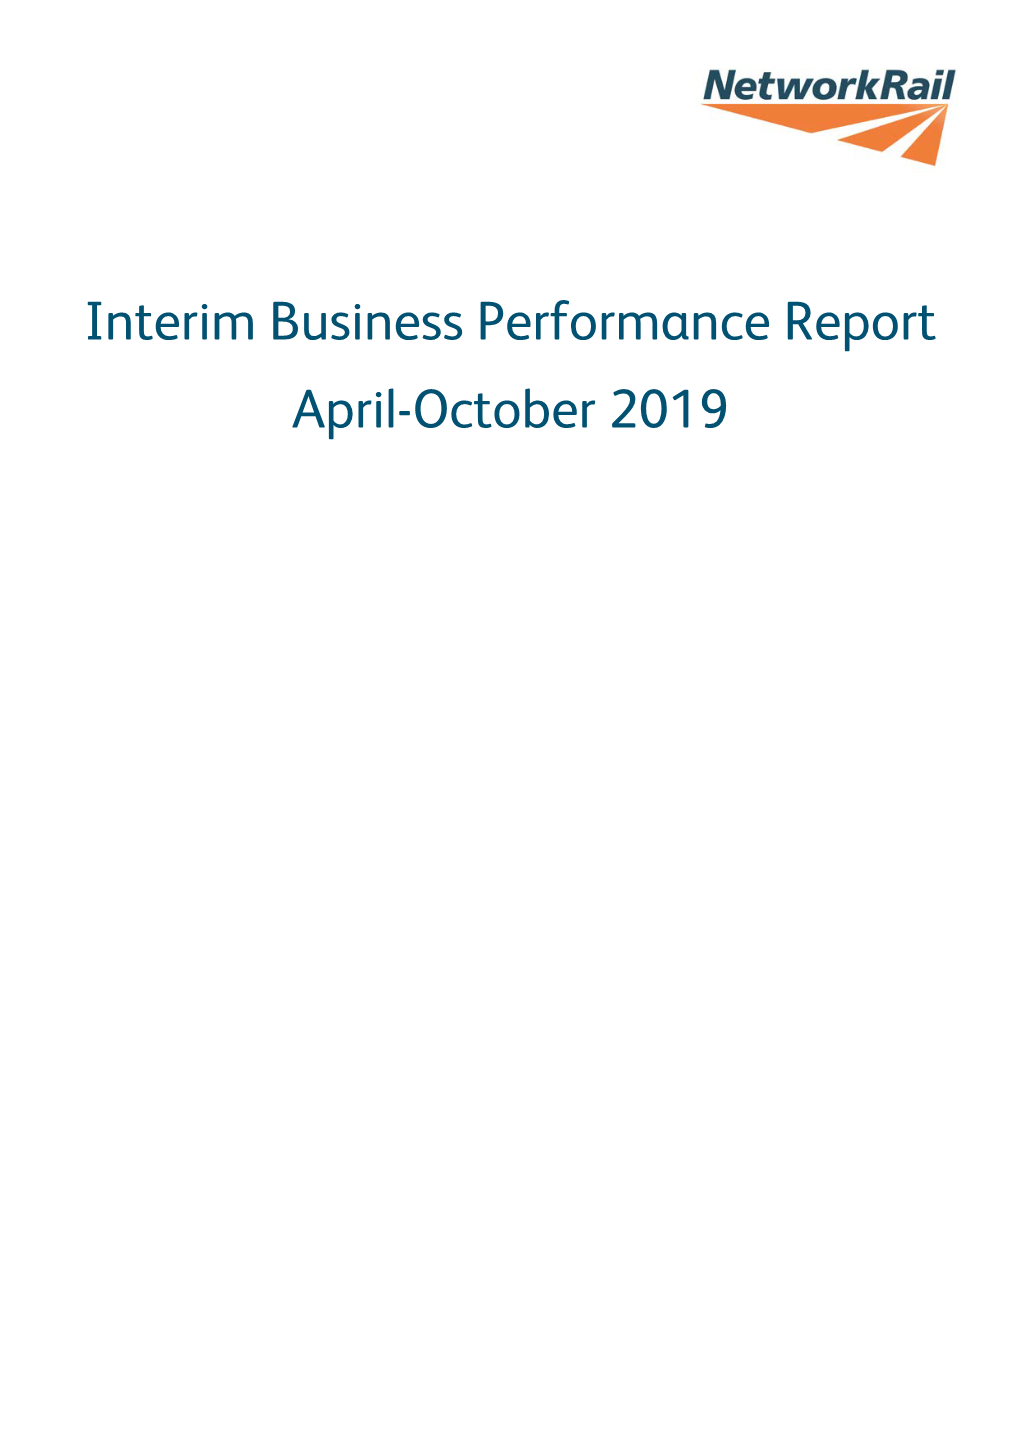 Network Rail Interim Business Performance Report 2019-20